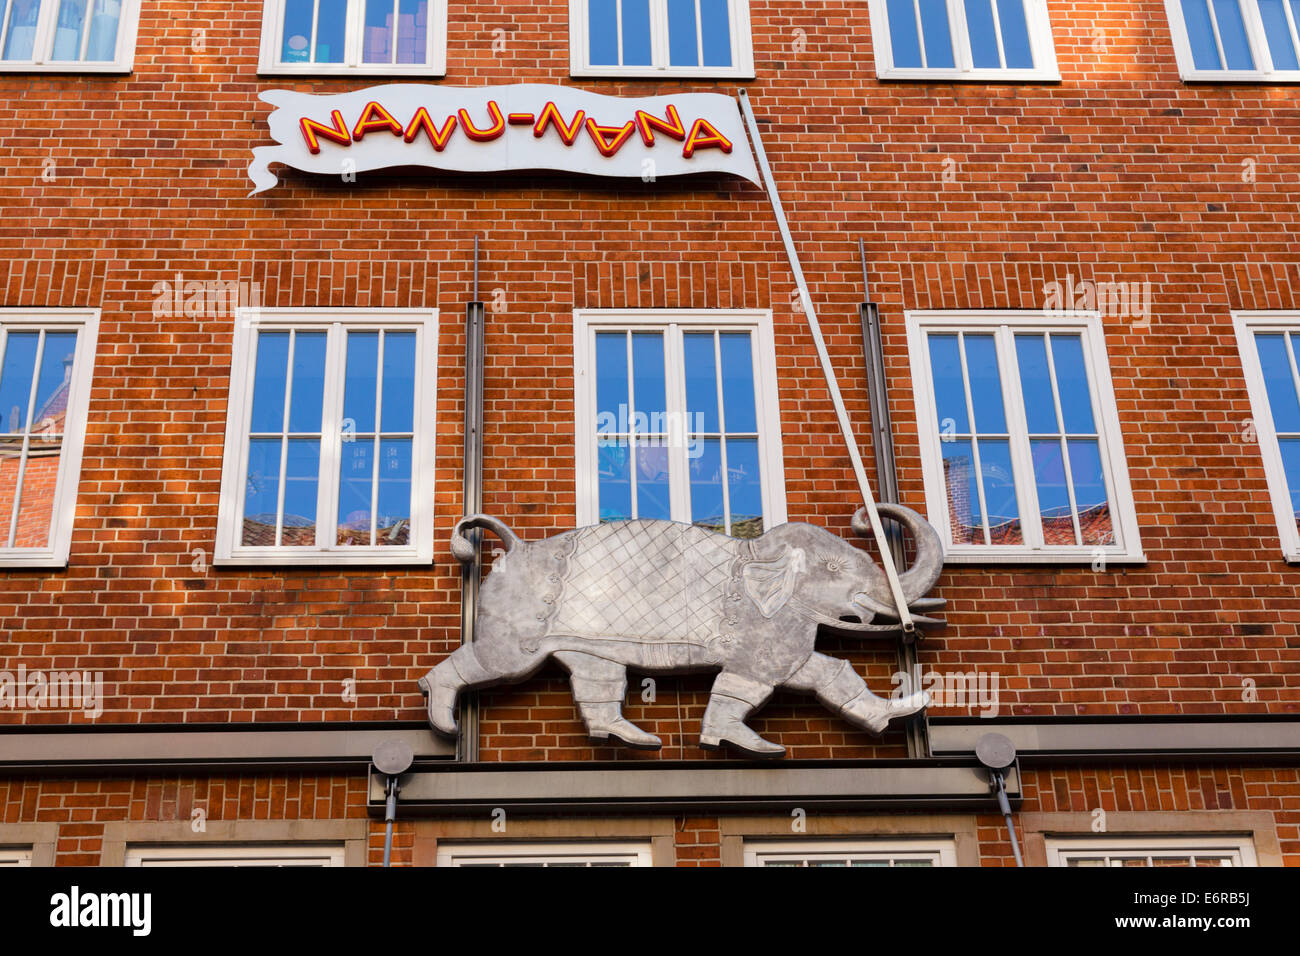 Elephant with flag detail from 'Nanu-Nana' childrens shop, Bremen, Germany. Stock Photo